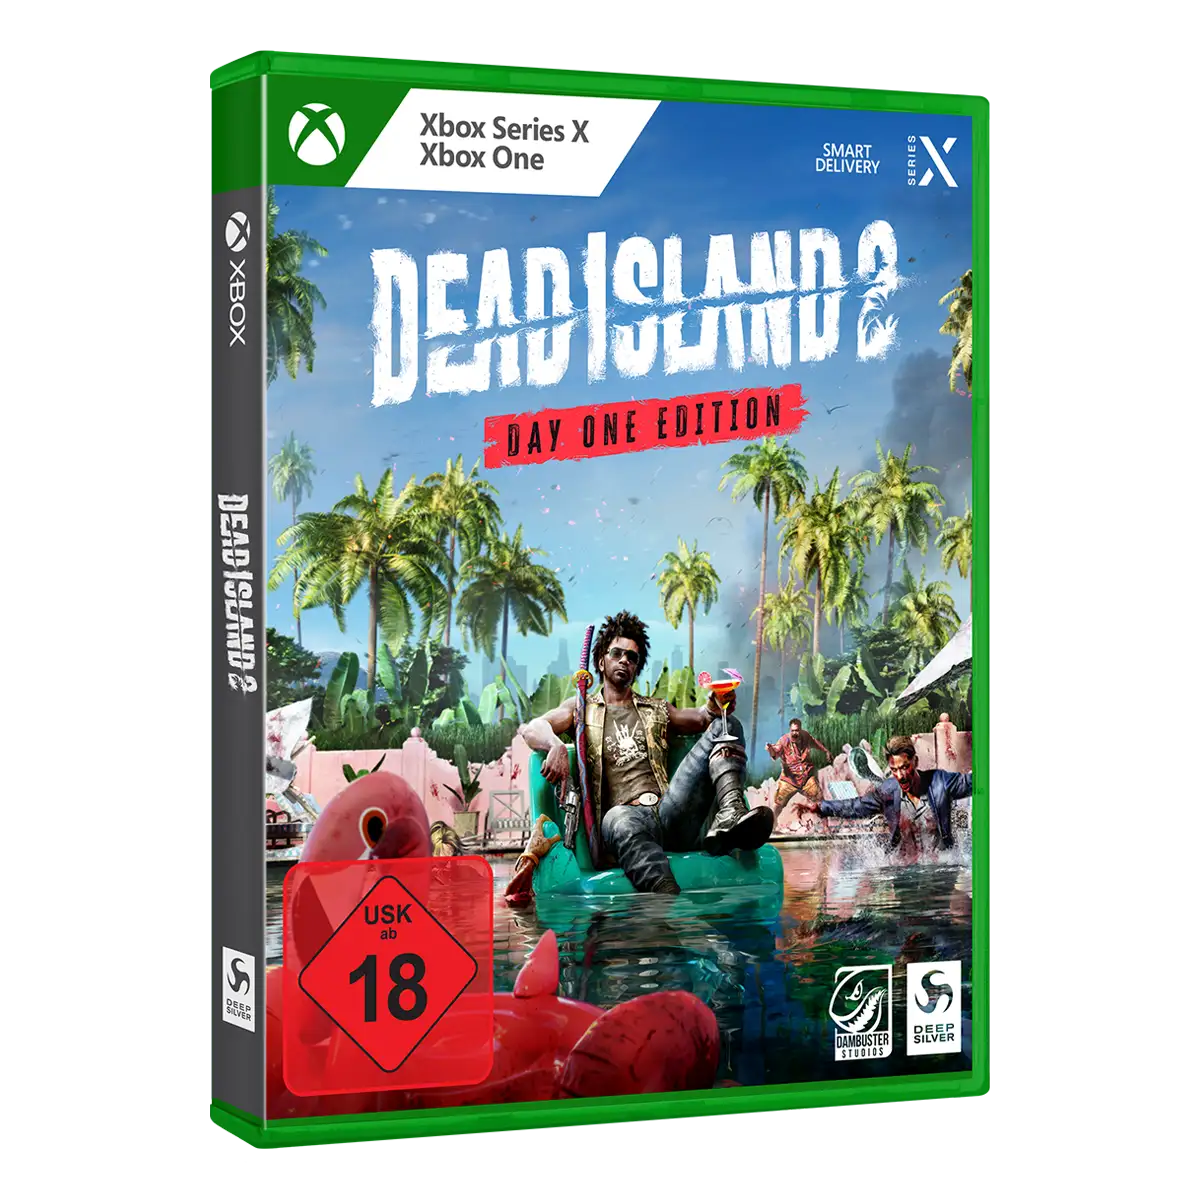 Dead Island 2 Day One Edition (XONE/XSRX) (USK) Image 2